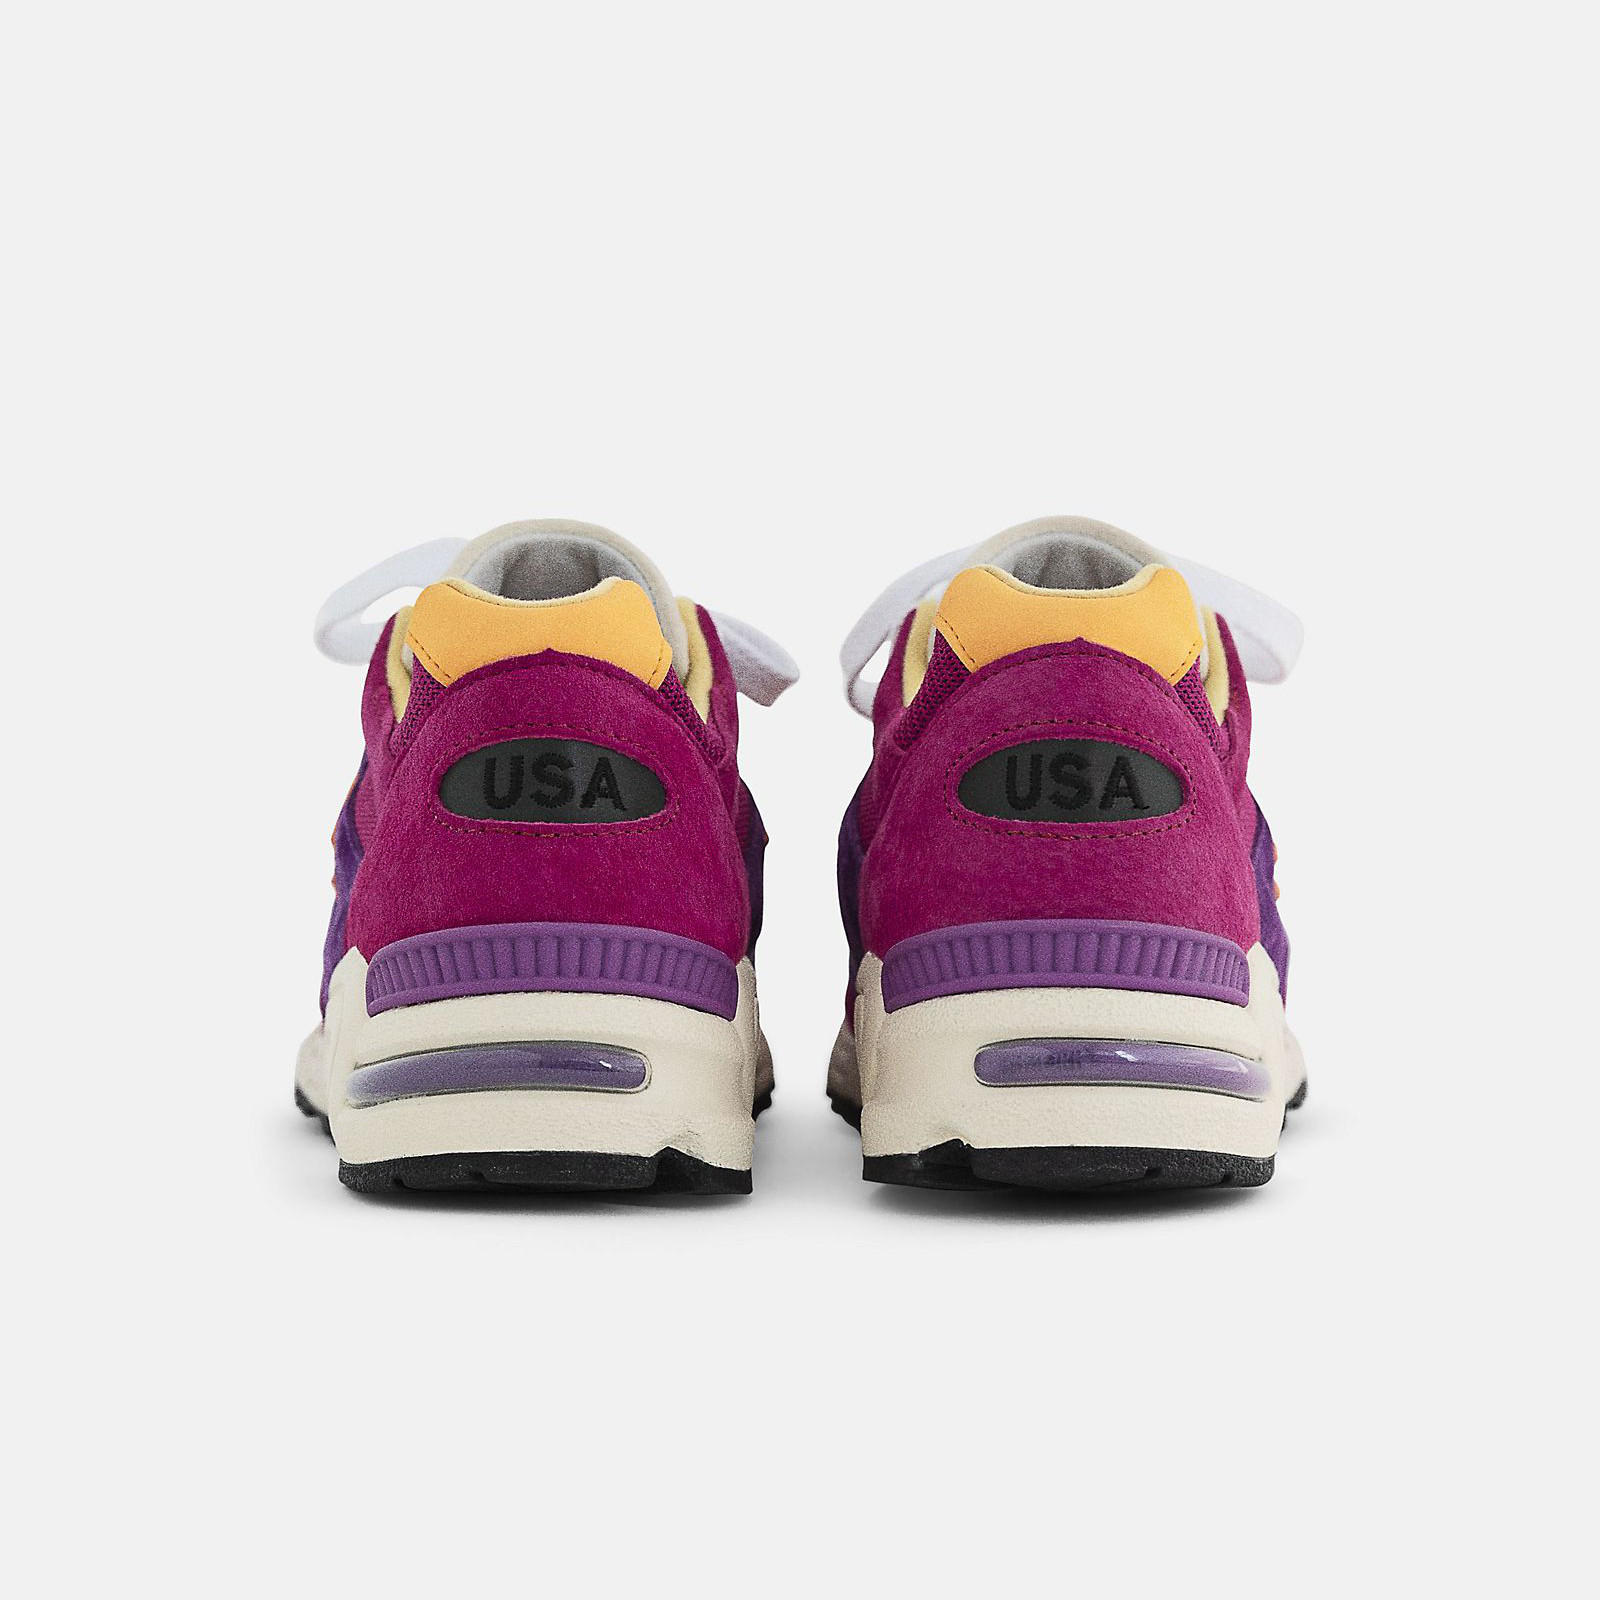 New Balance 990v2
Purple / Pink